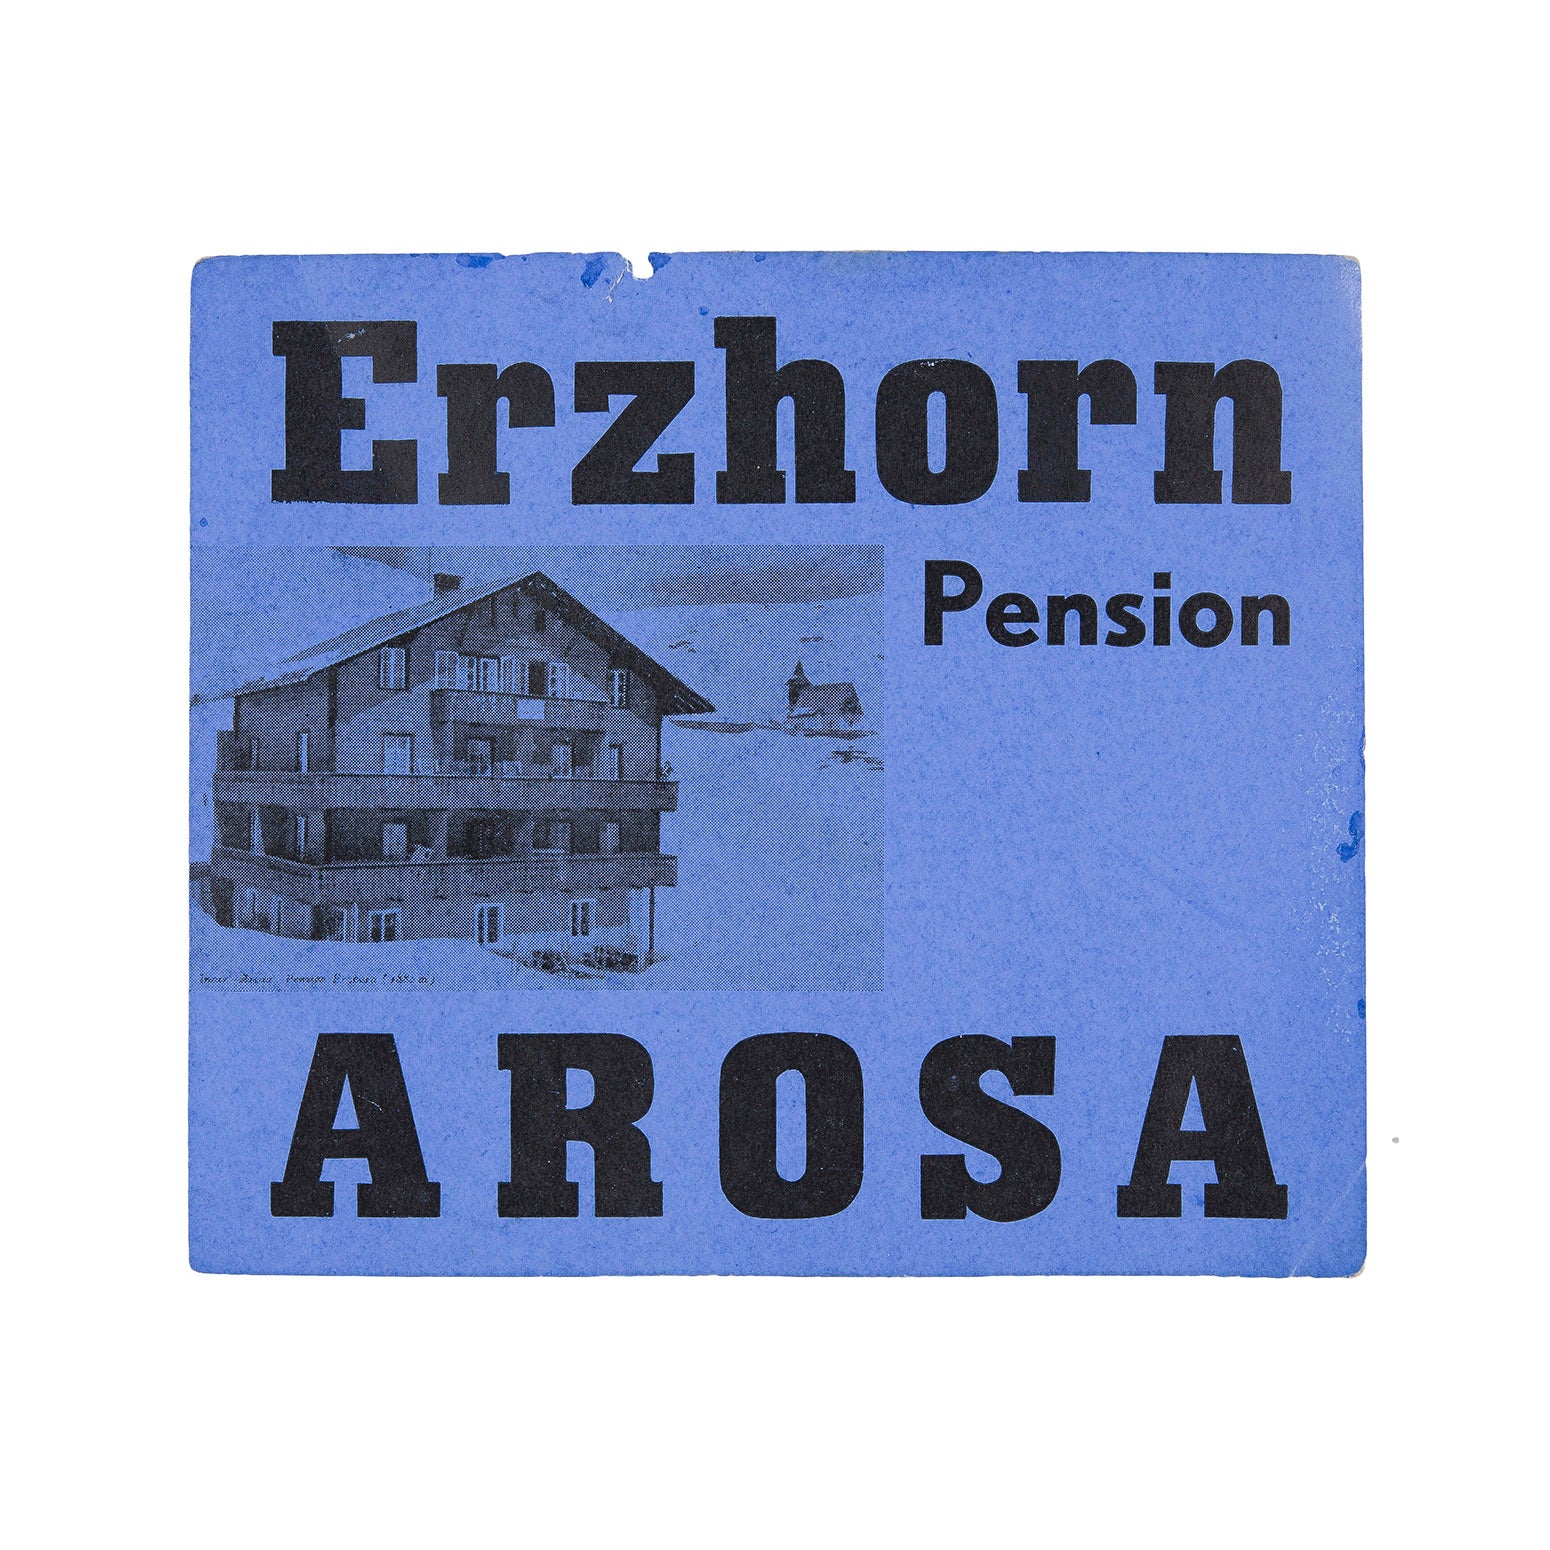 Erhorn Pension Arosa (luggage label)